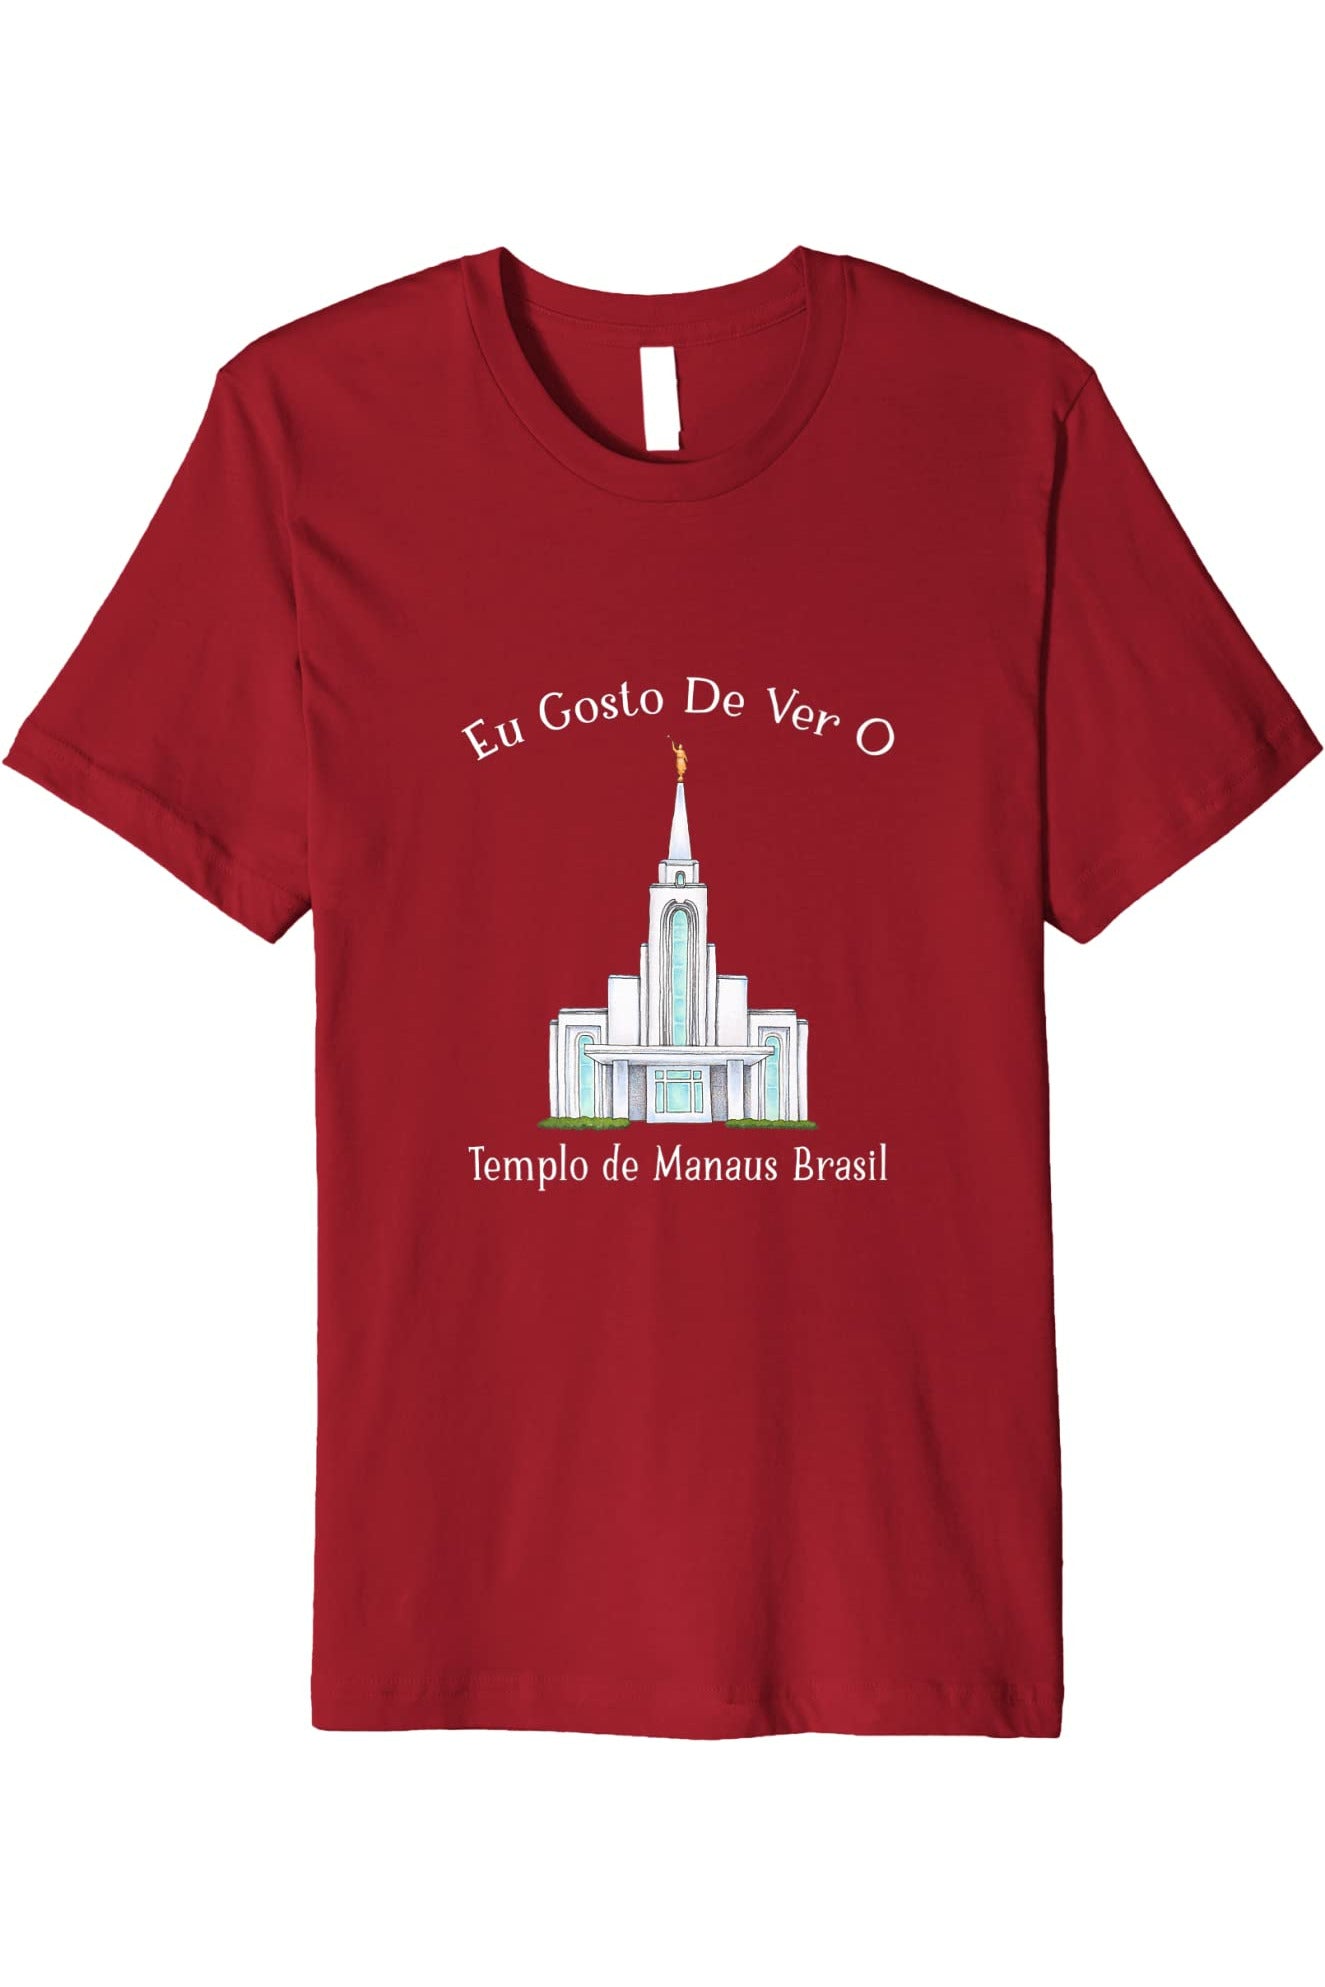 Templo de Manaus Brasil T-Shirt - Premium - Happy Style (Portuguese) US